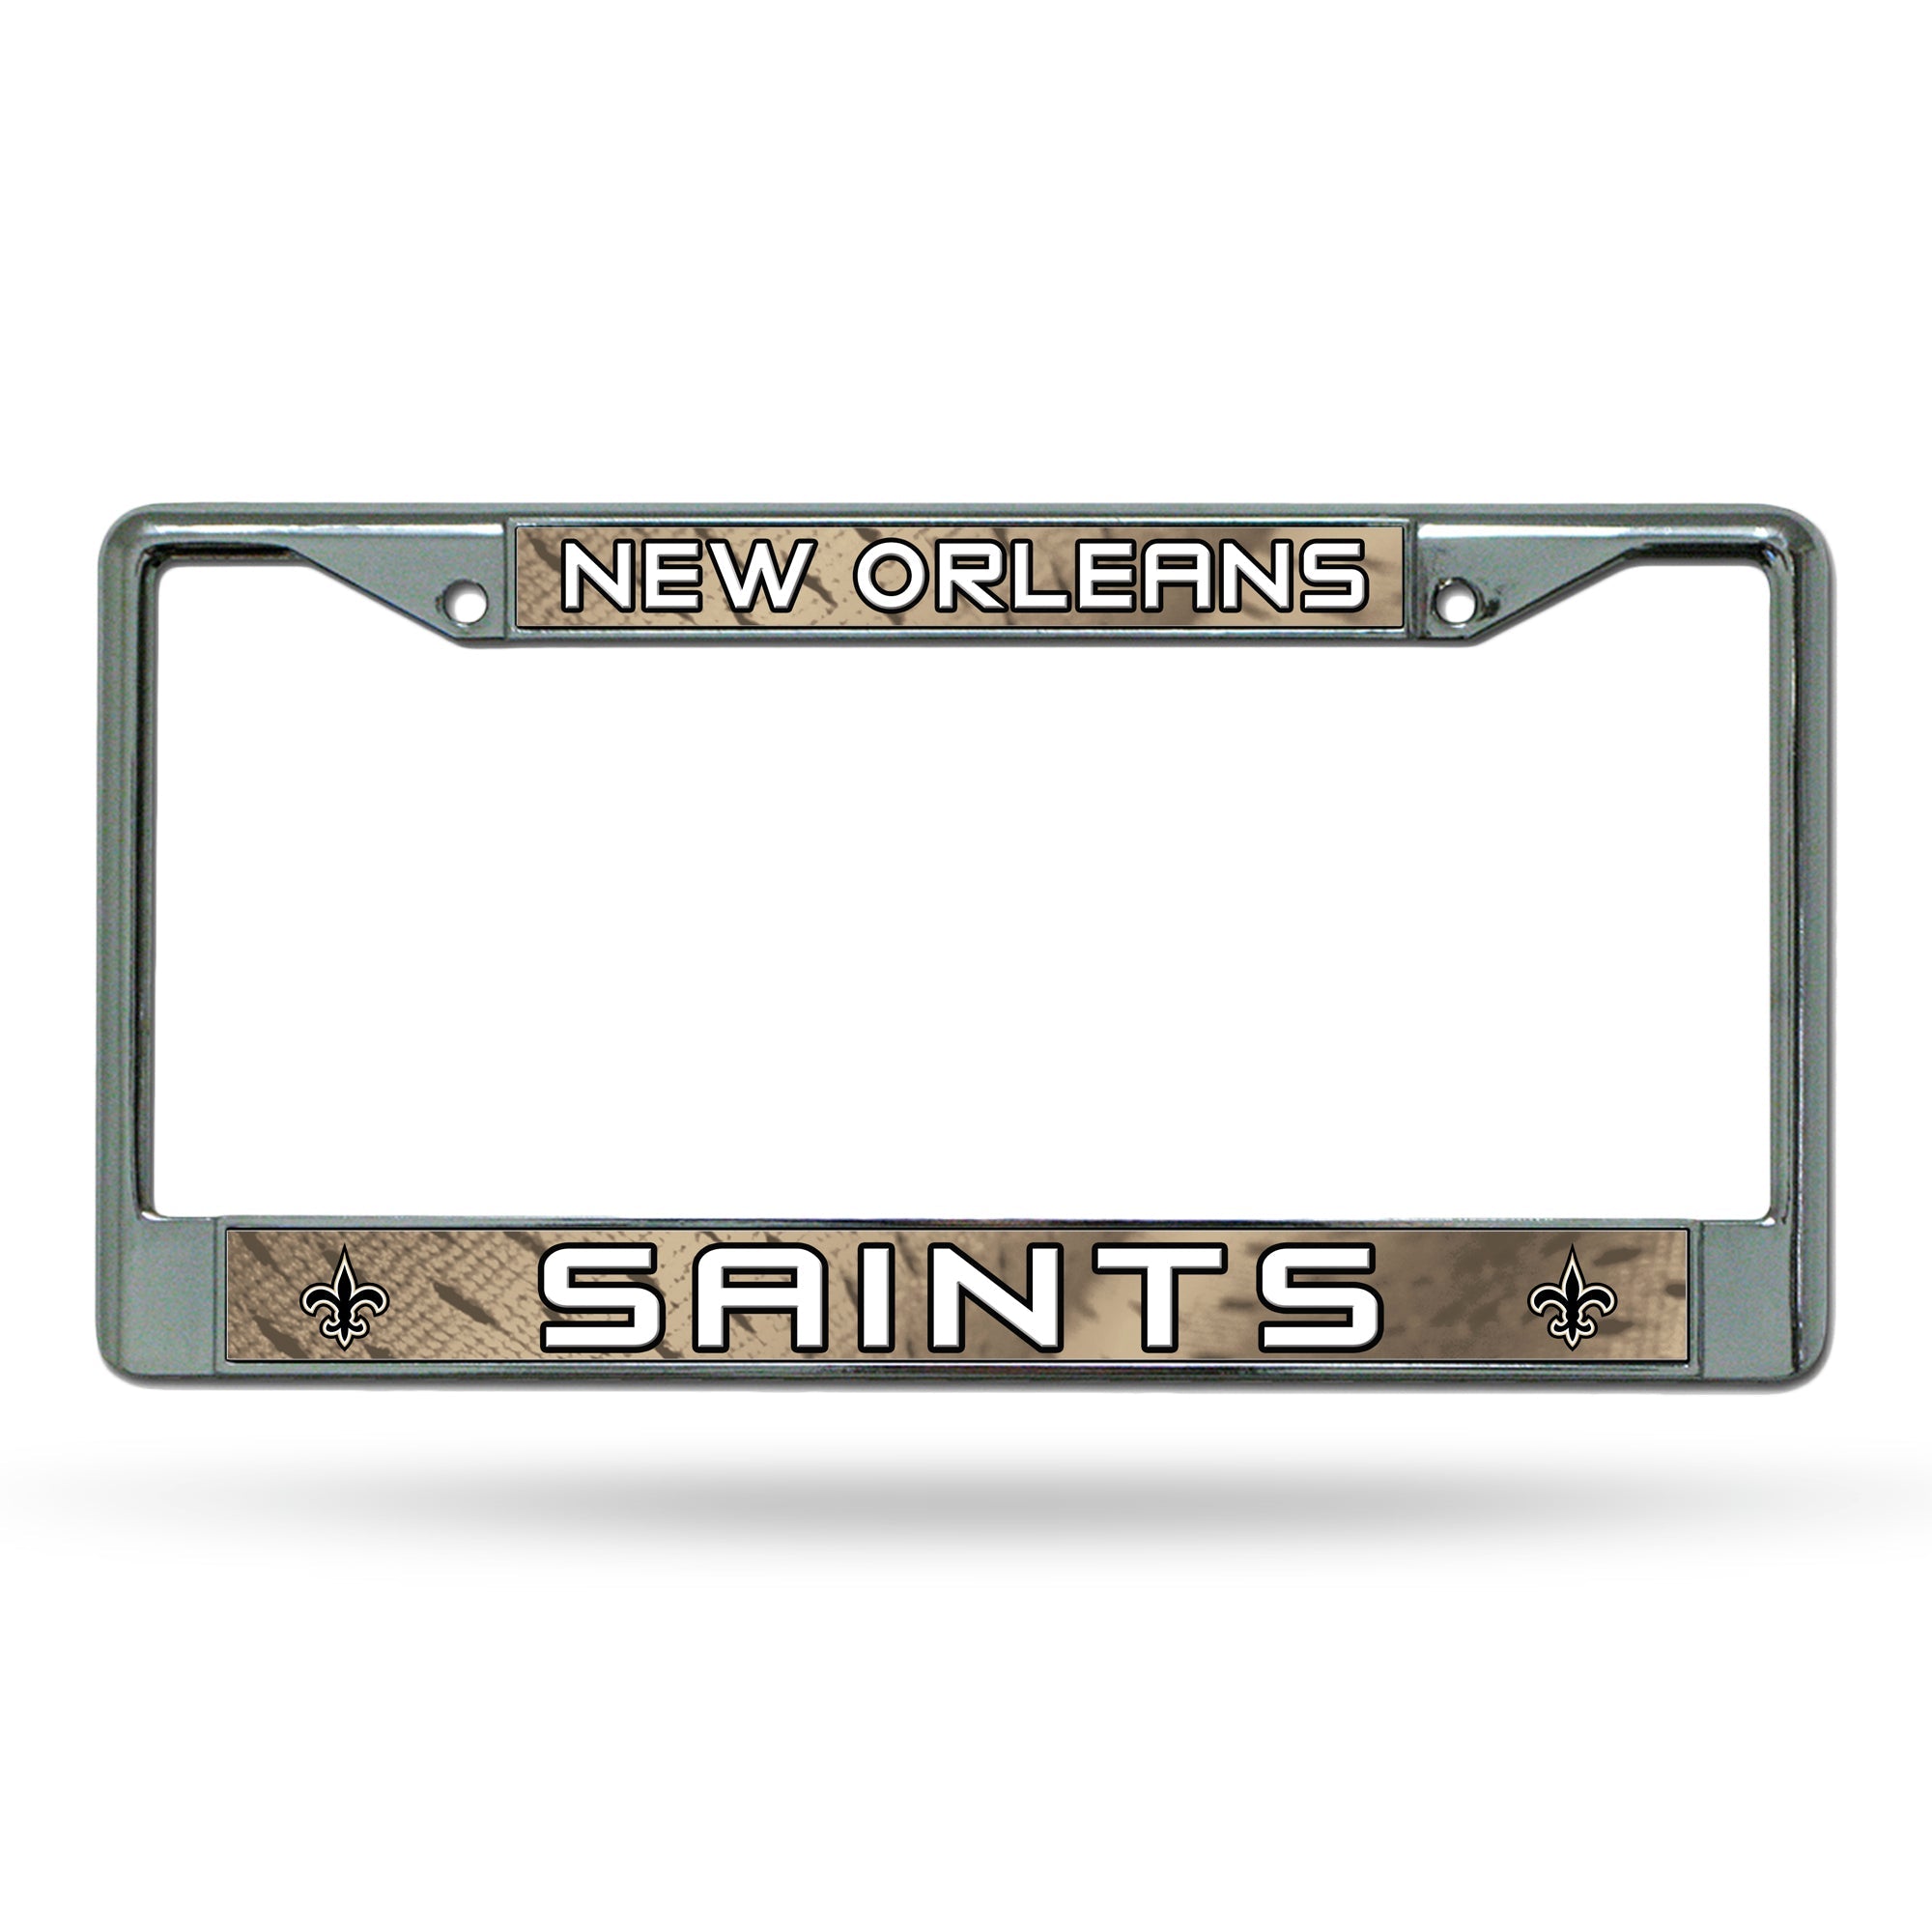 New Orleans Saints - License Plate Frames